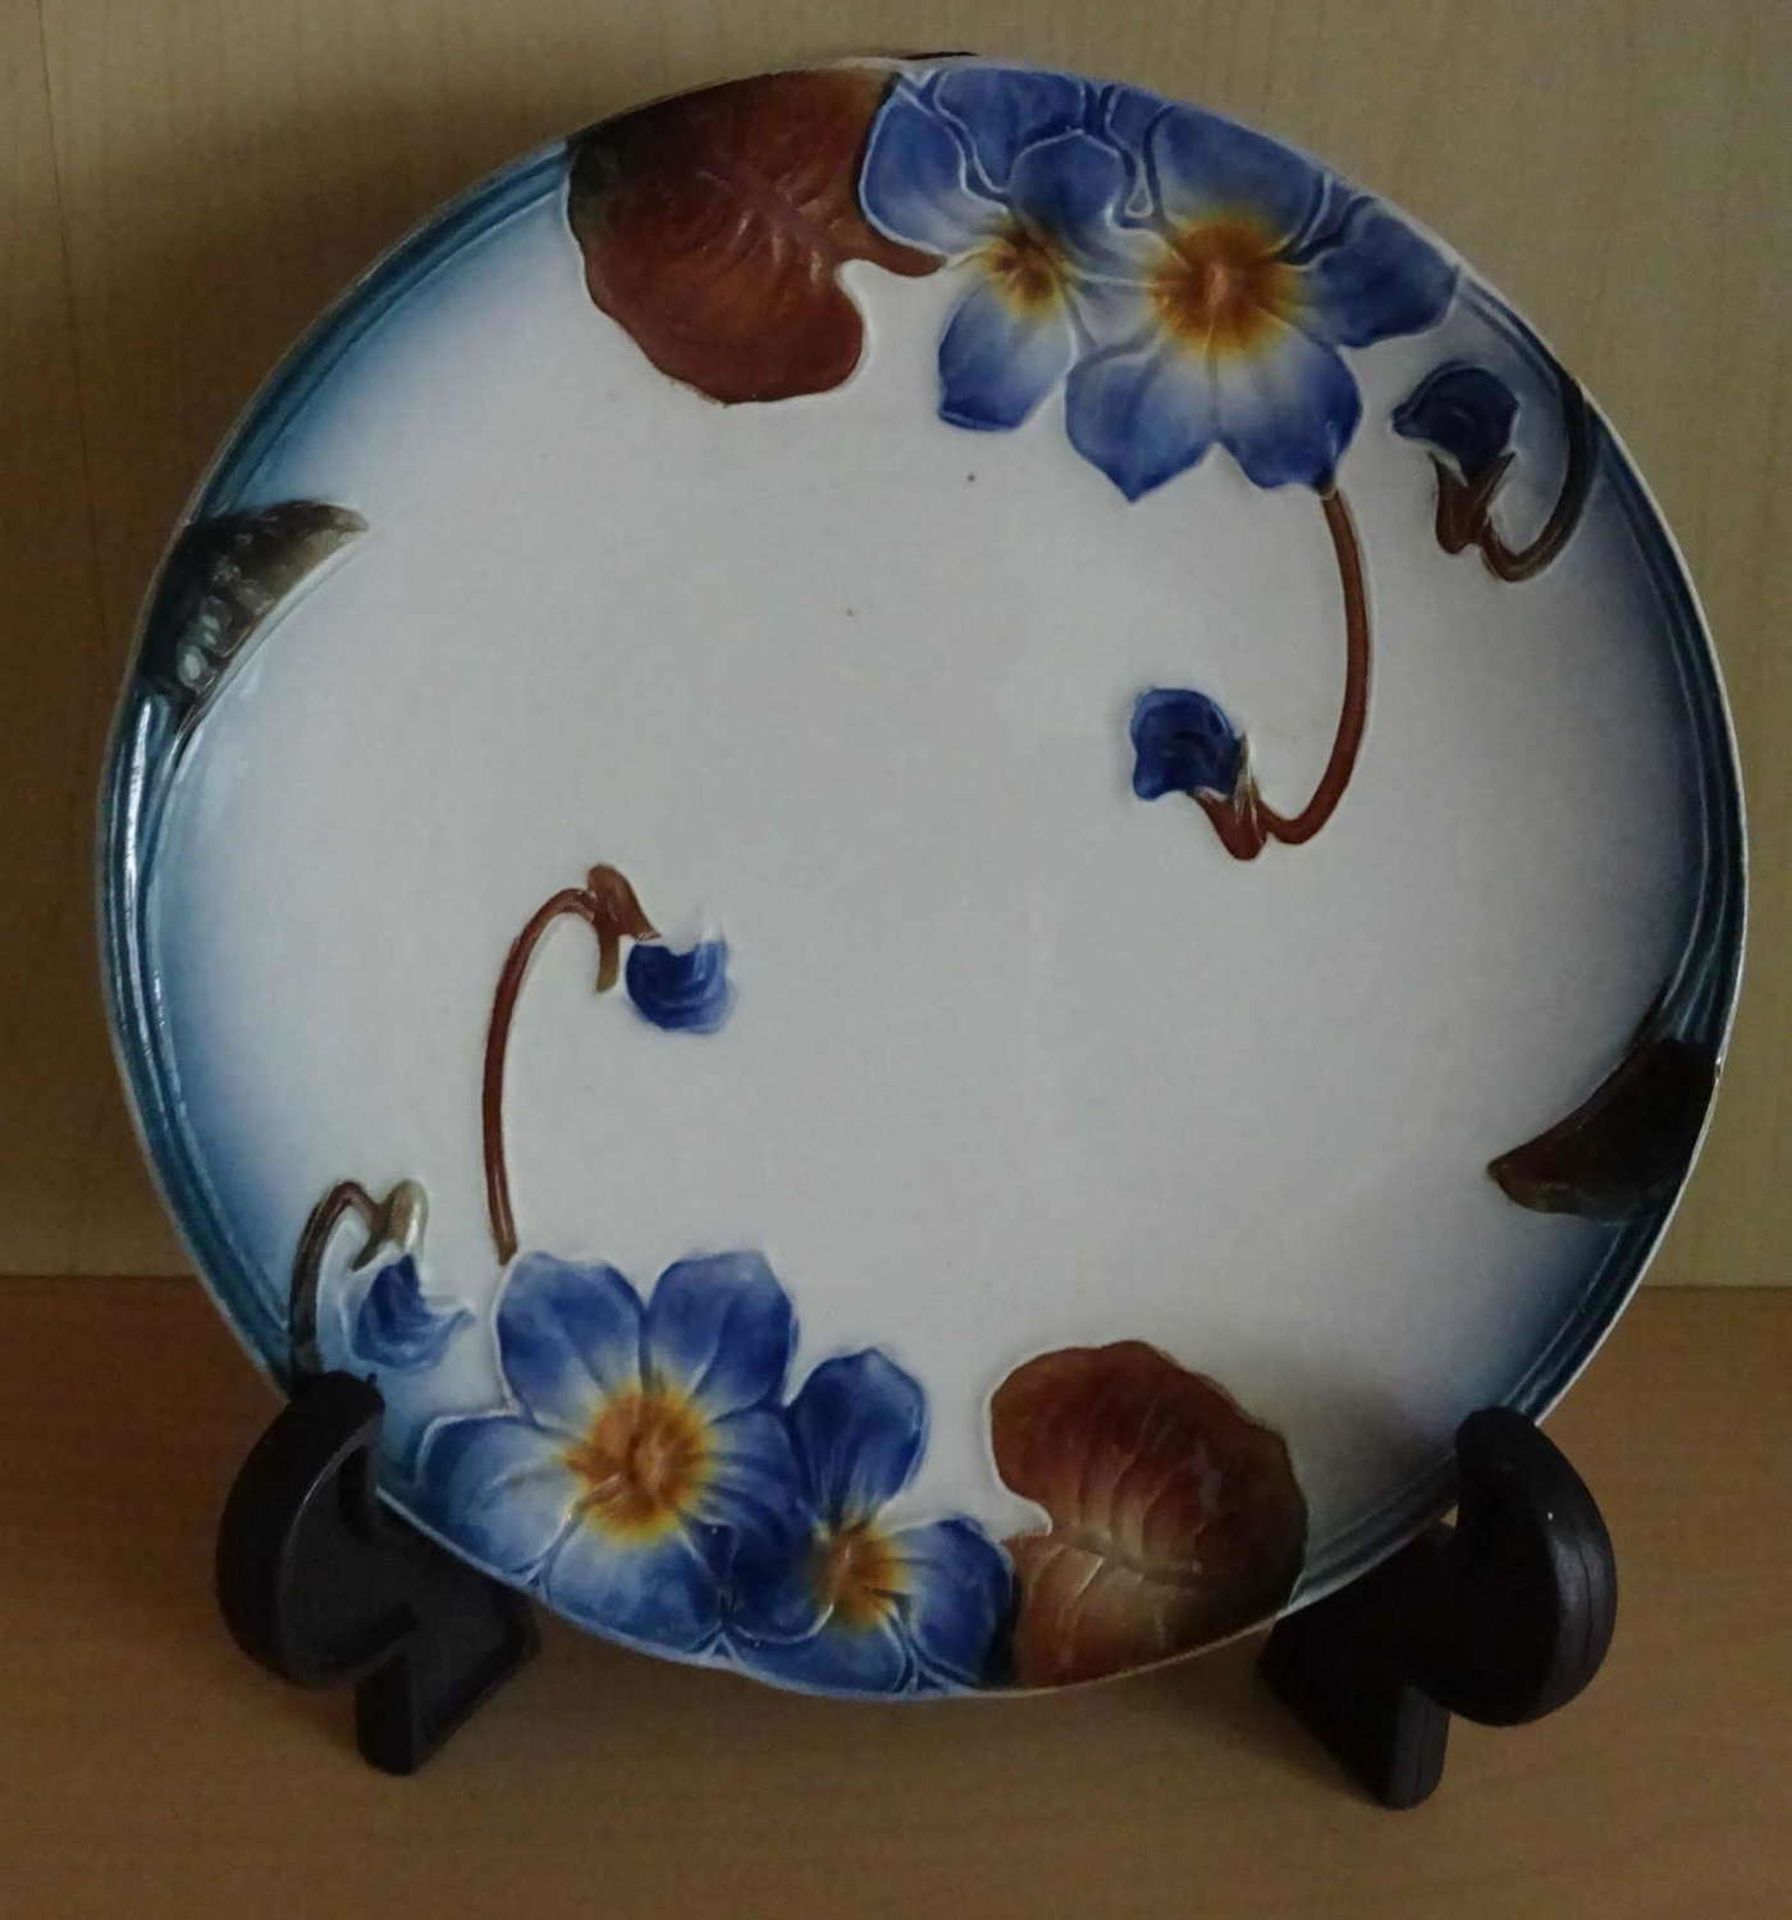 4 Dessertteller, Grünstadter Keramik, Jugendstil ca. 1907-1919, Motiv "Hellblaue Stiefmütterchen". - Bild 2 aus 2